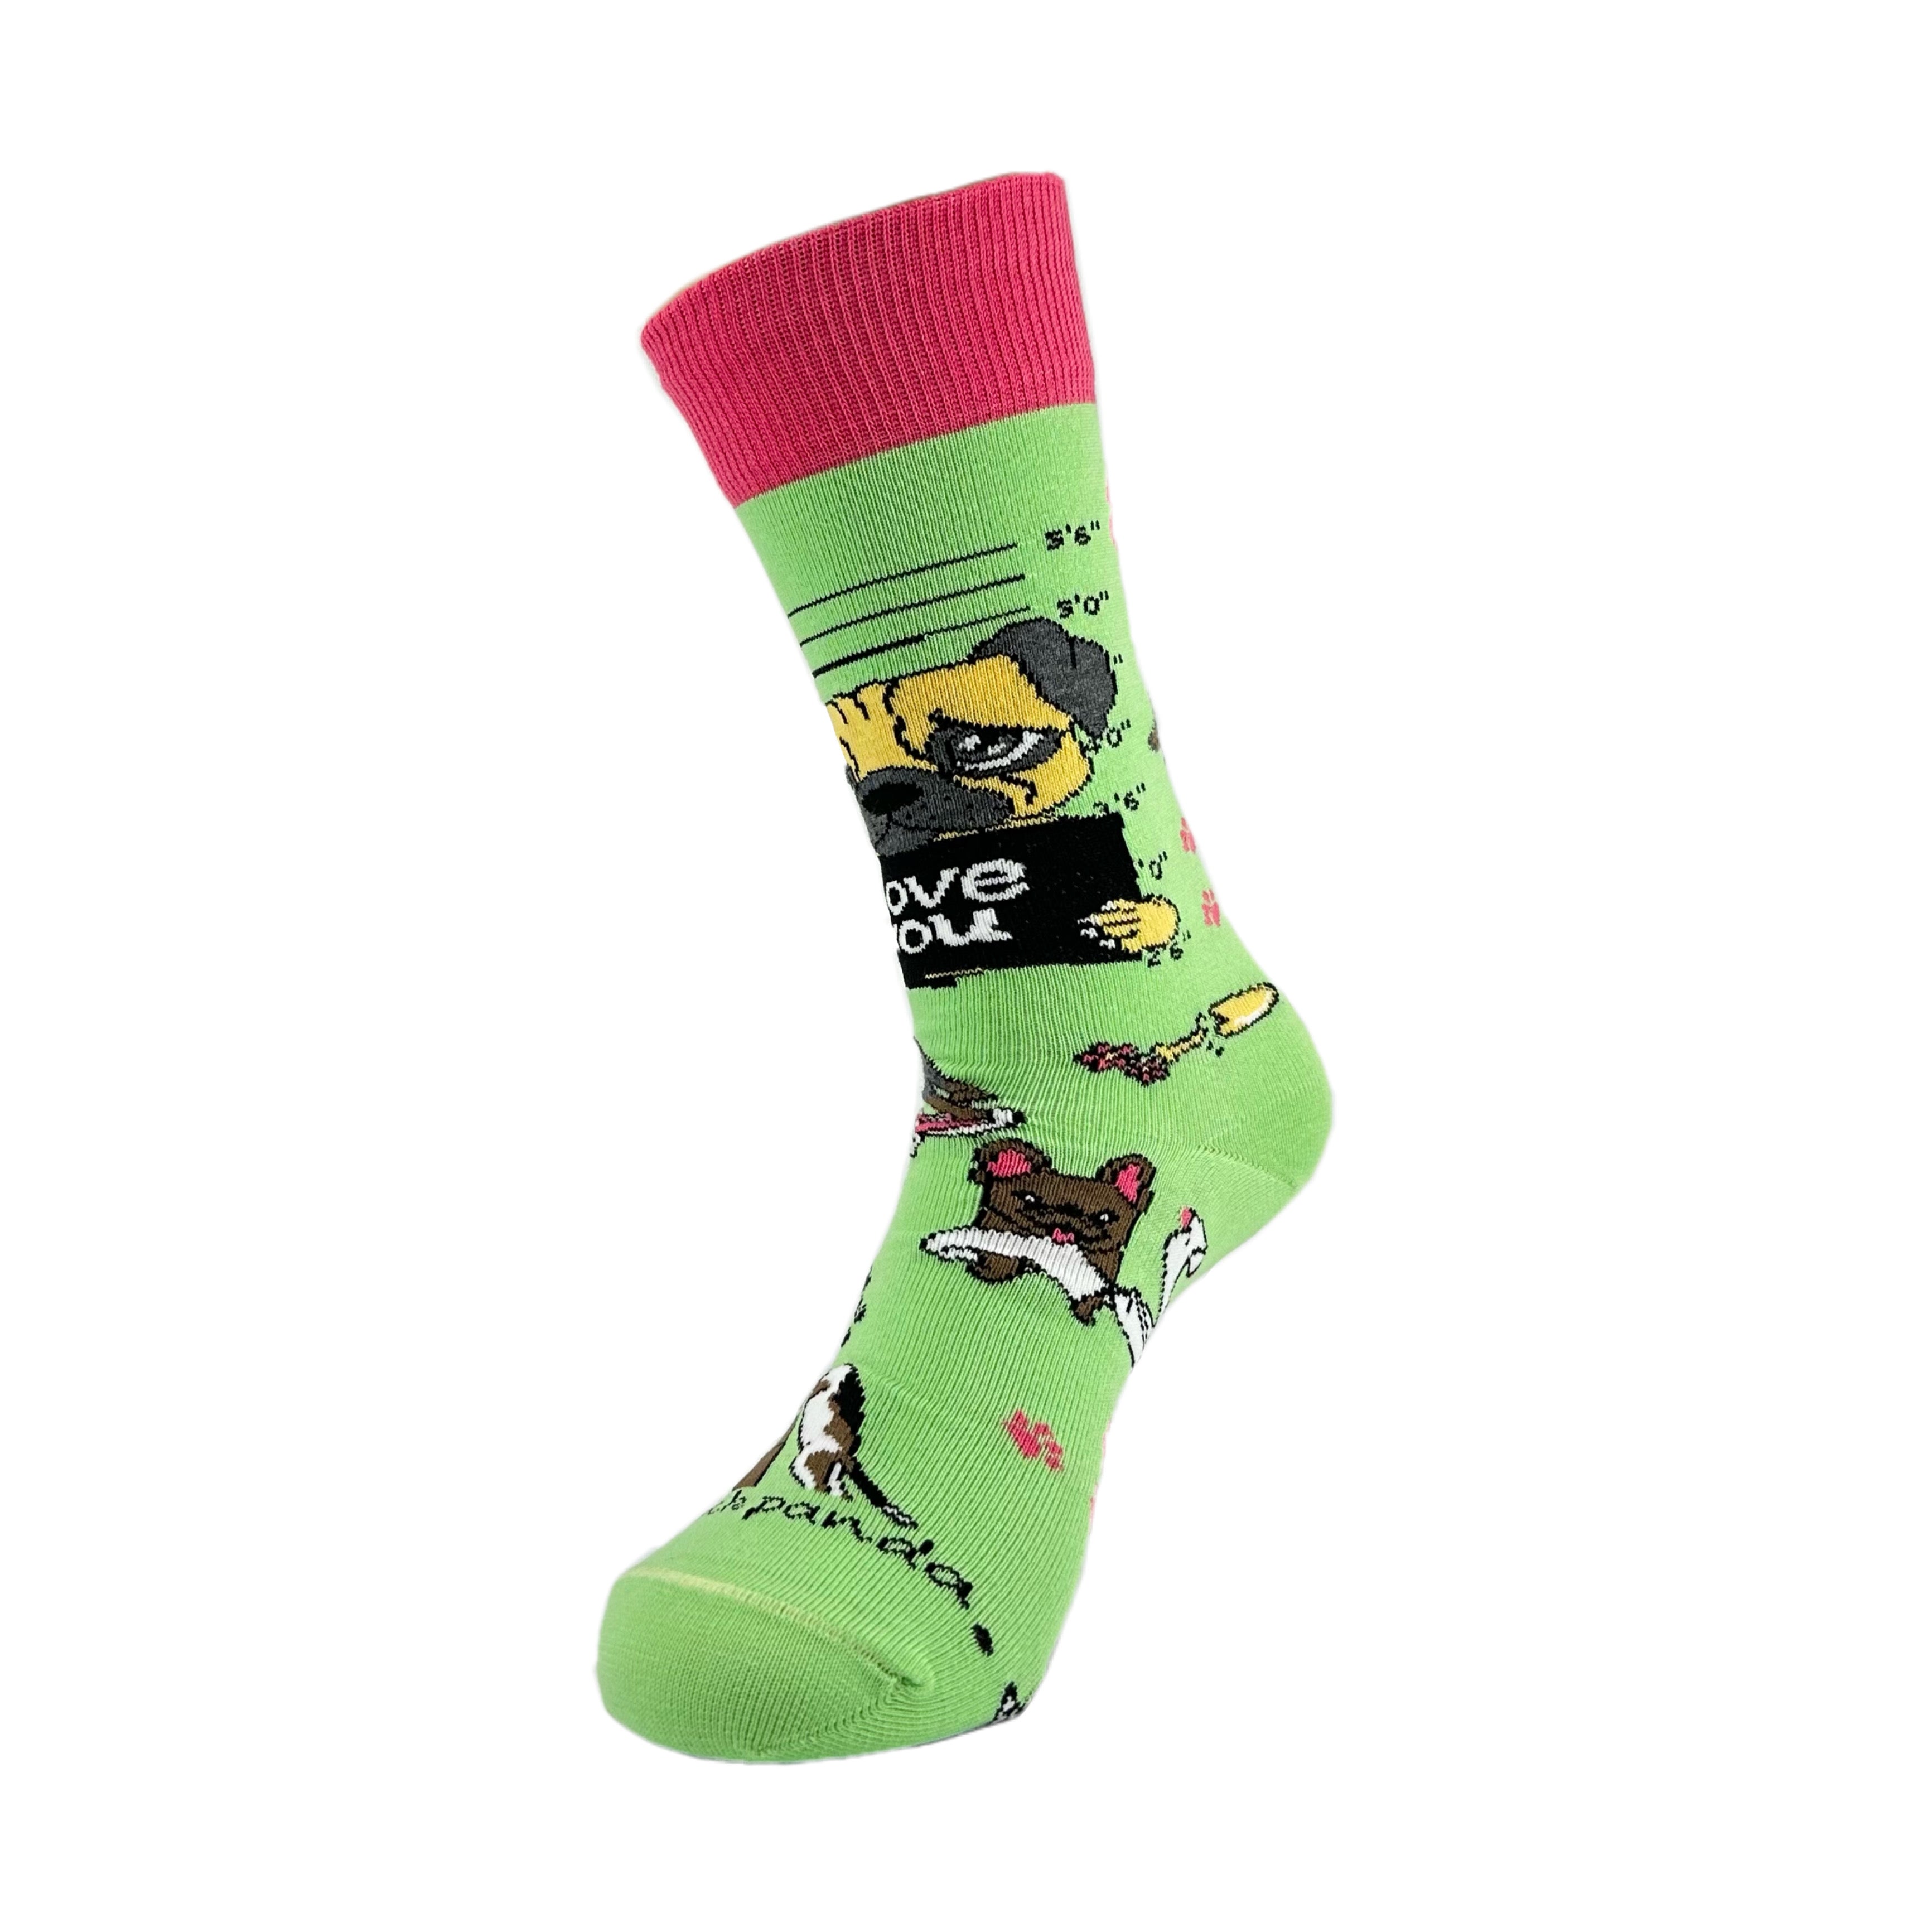 Bad and Guilty Dog Socks from the Sock Panda (Adult Medium)